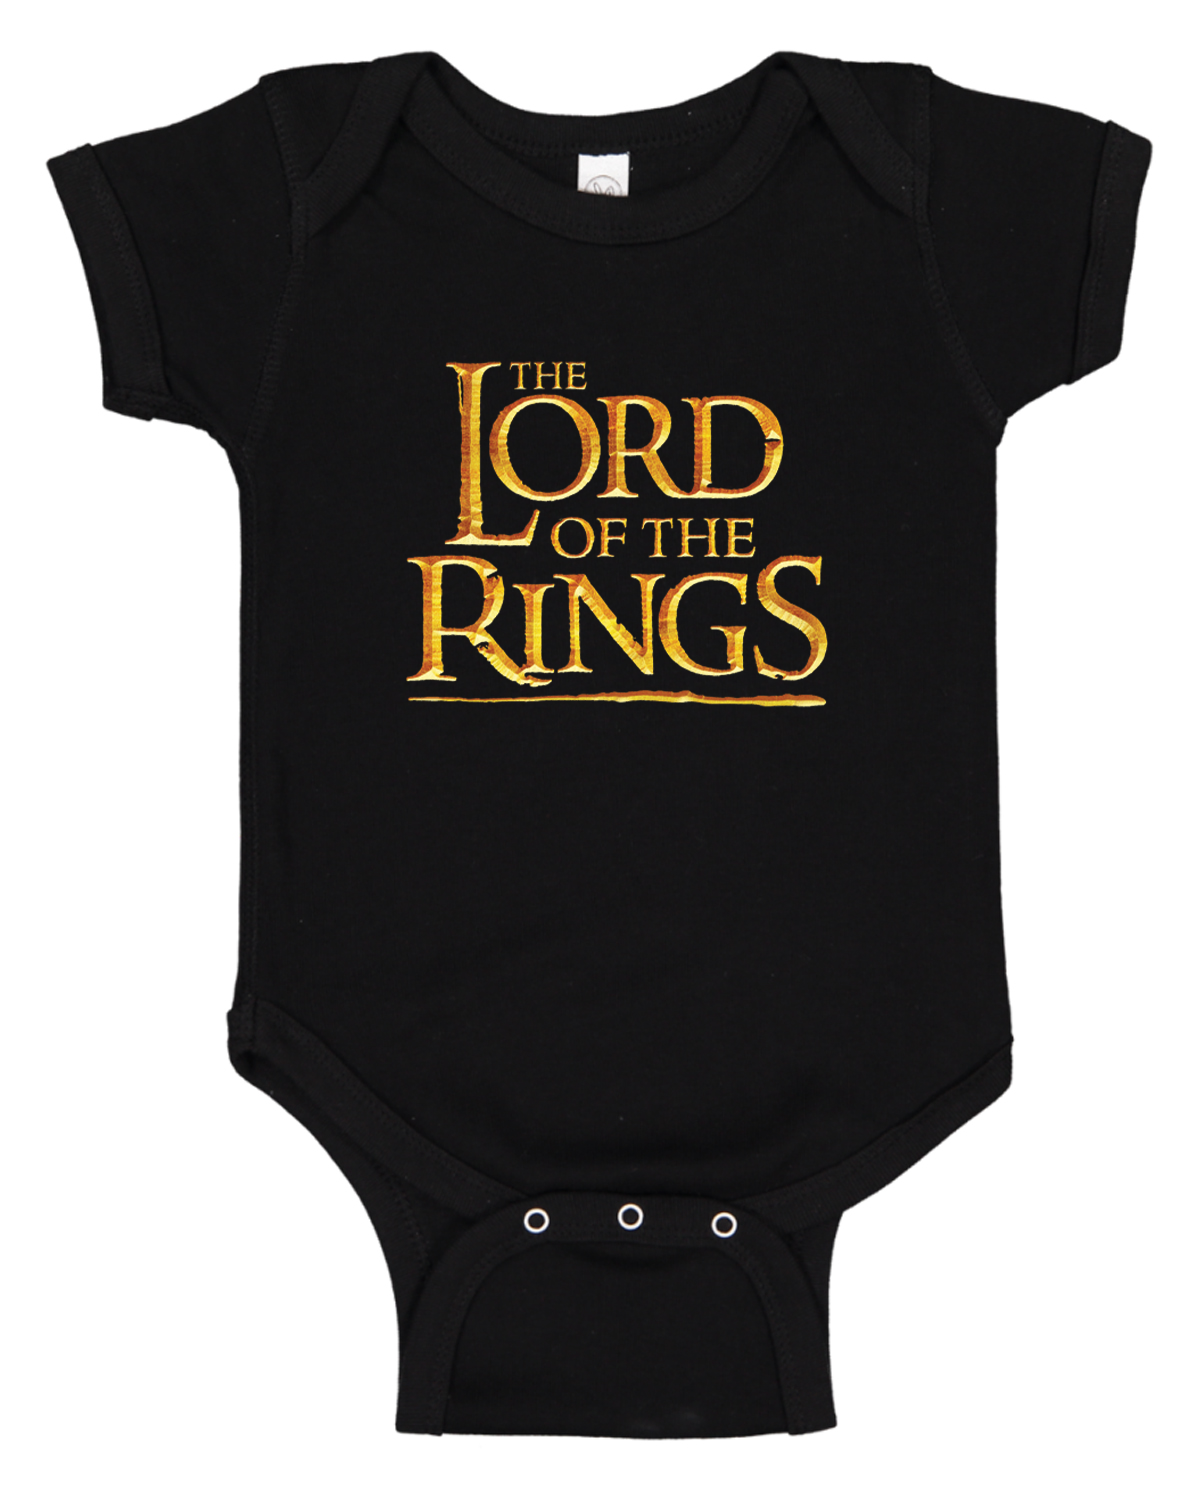 The Lord of the Rings Movie Baby Romper Onesie